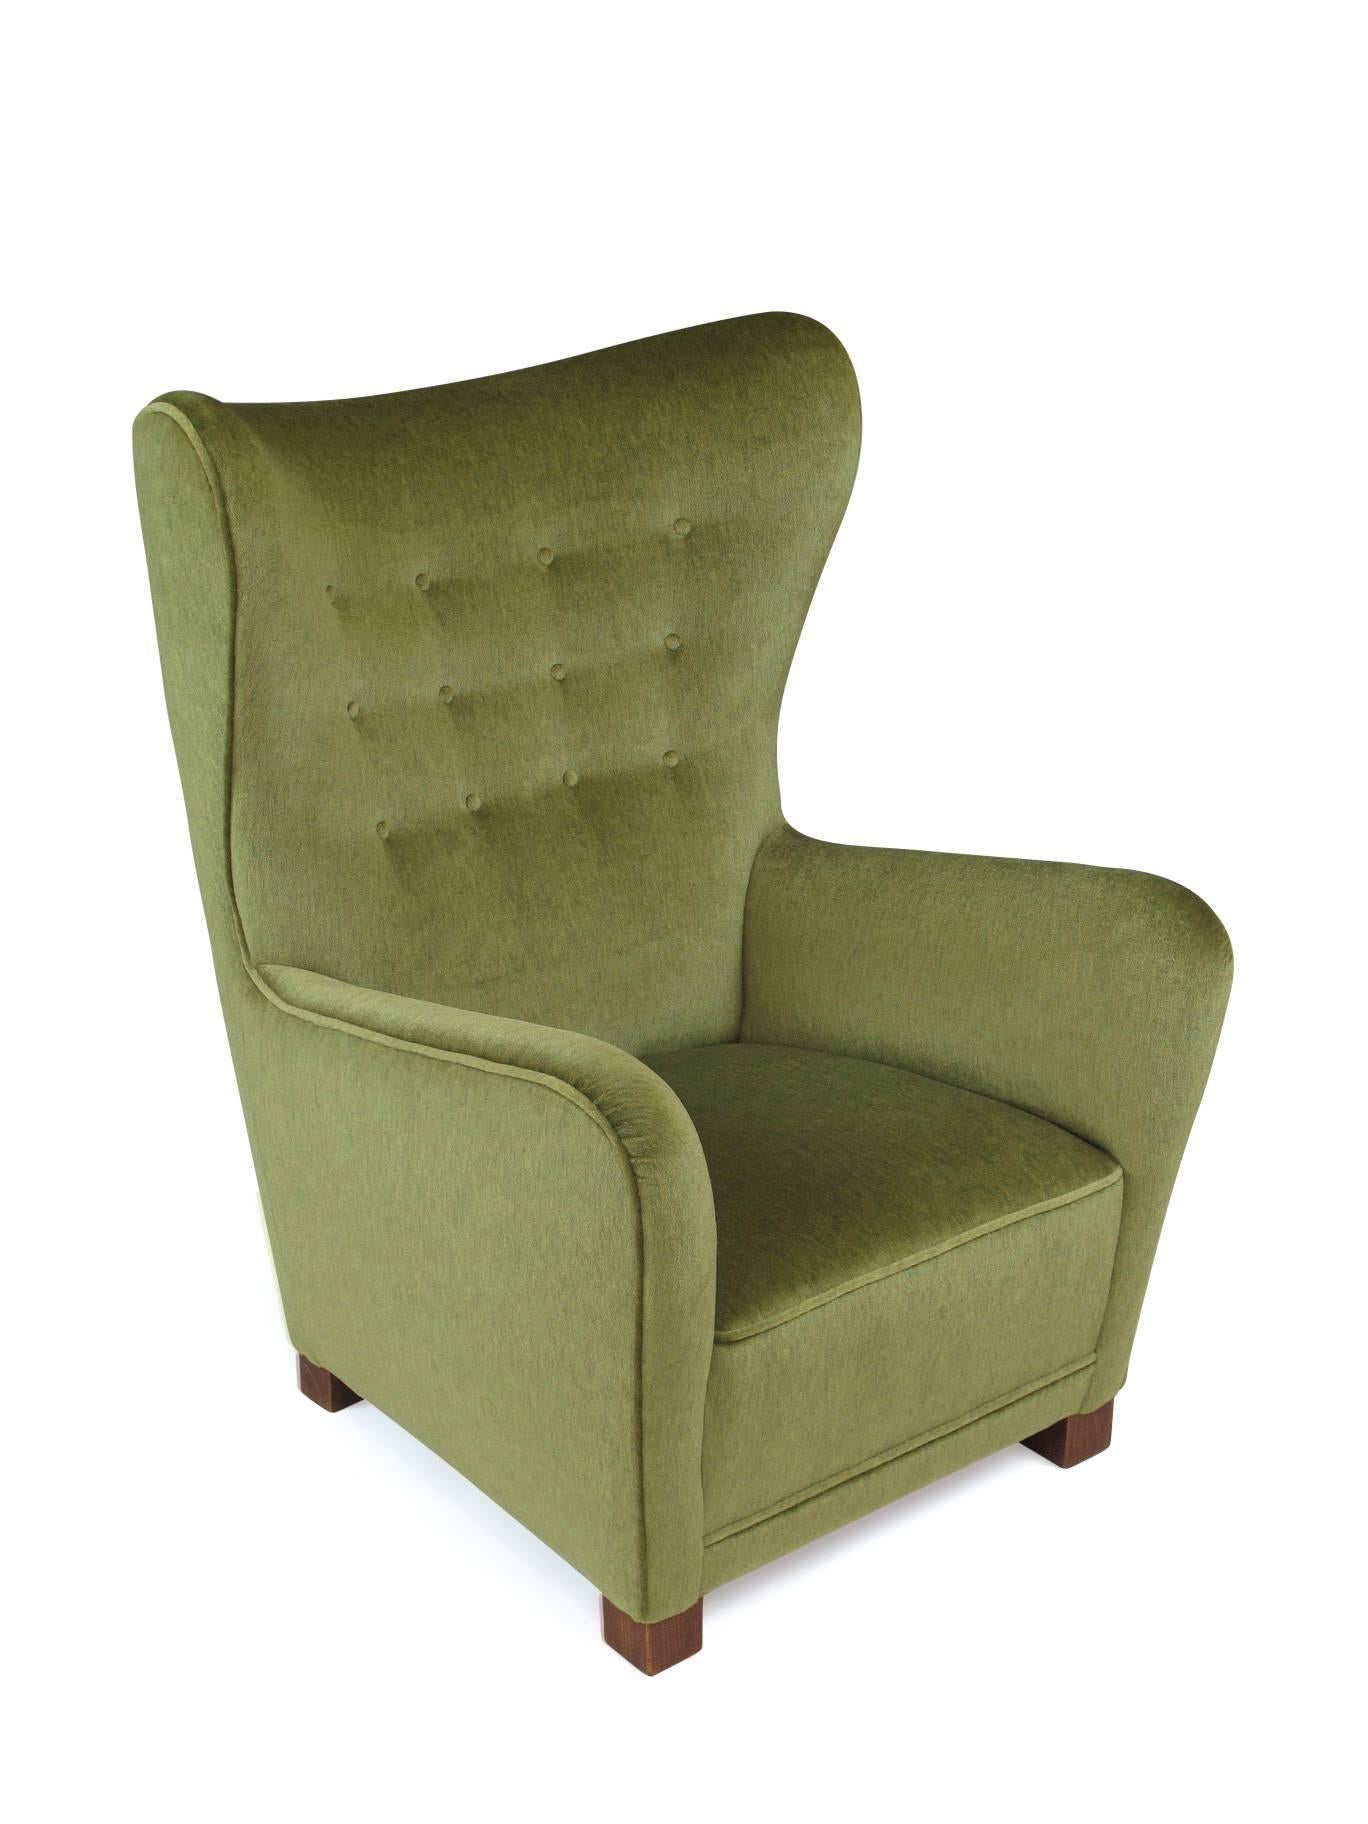 high back green chair